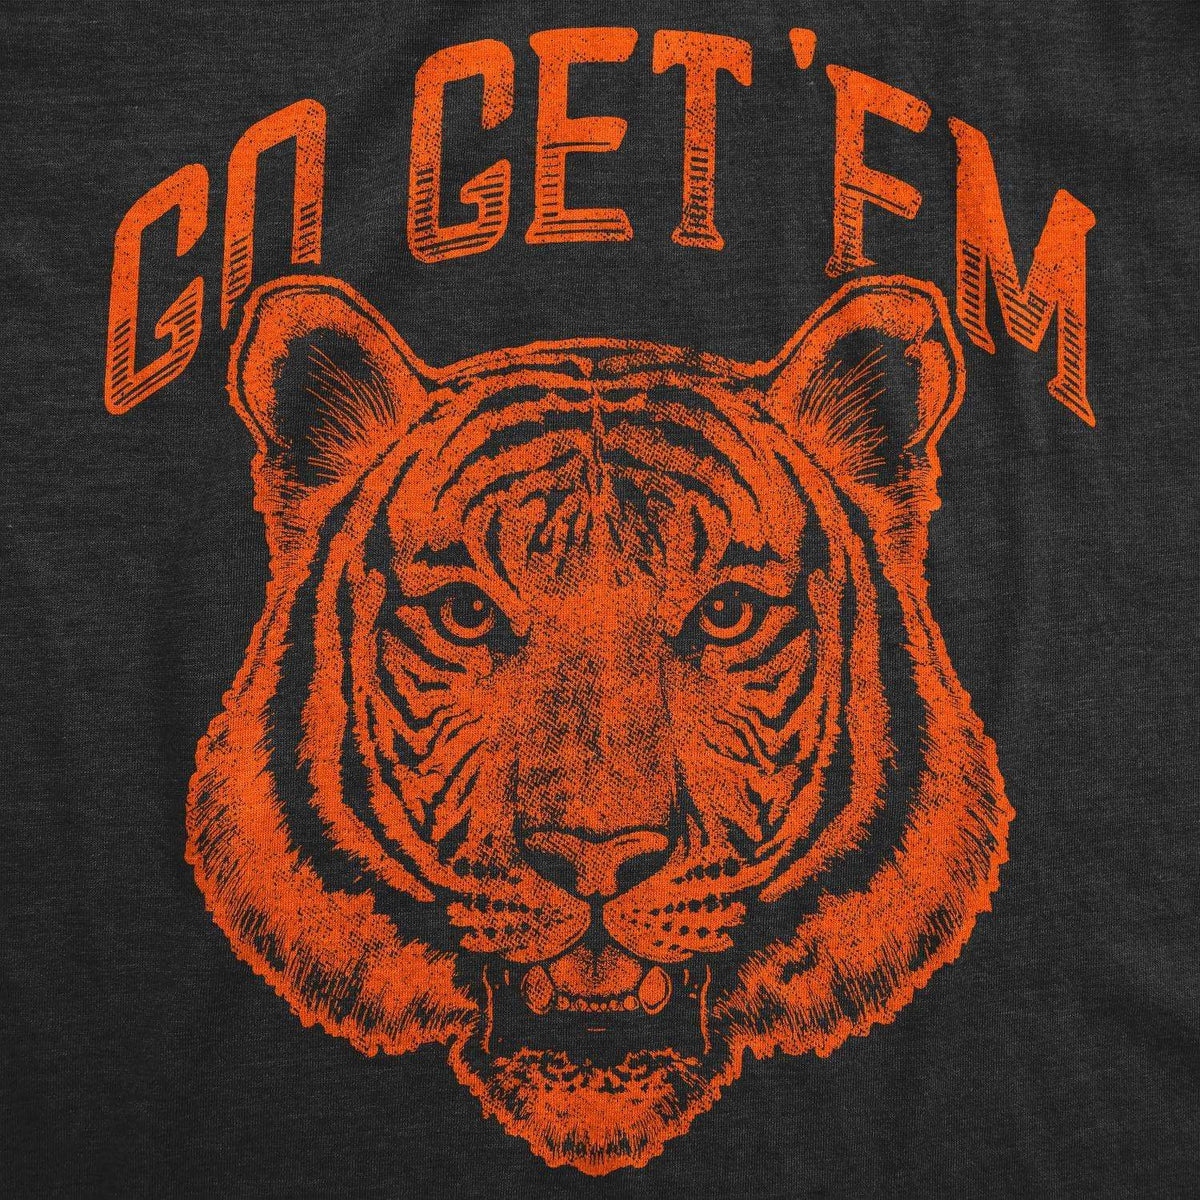 Go Get &#39;Em Tiger Men&#39;s Tshirt  -  Crazy Dog T-Shirts